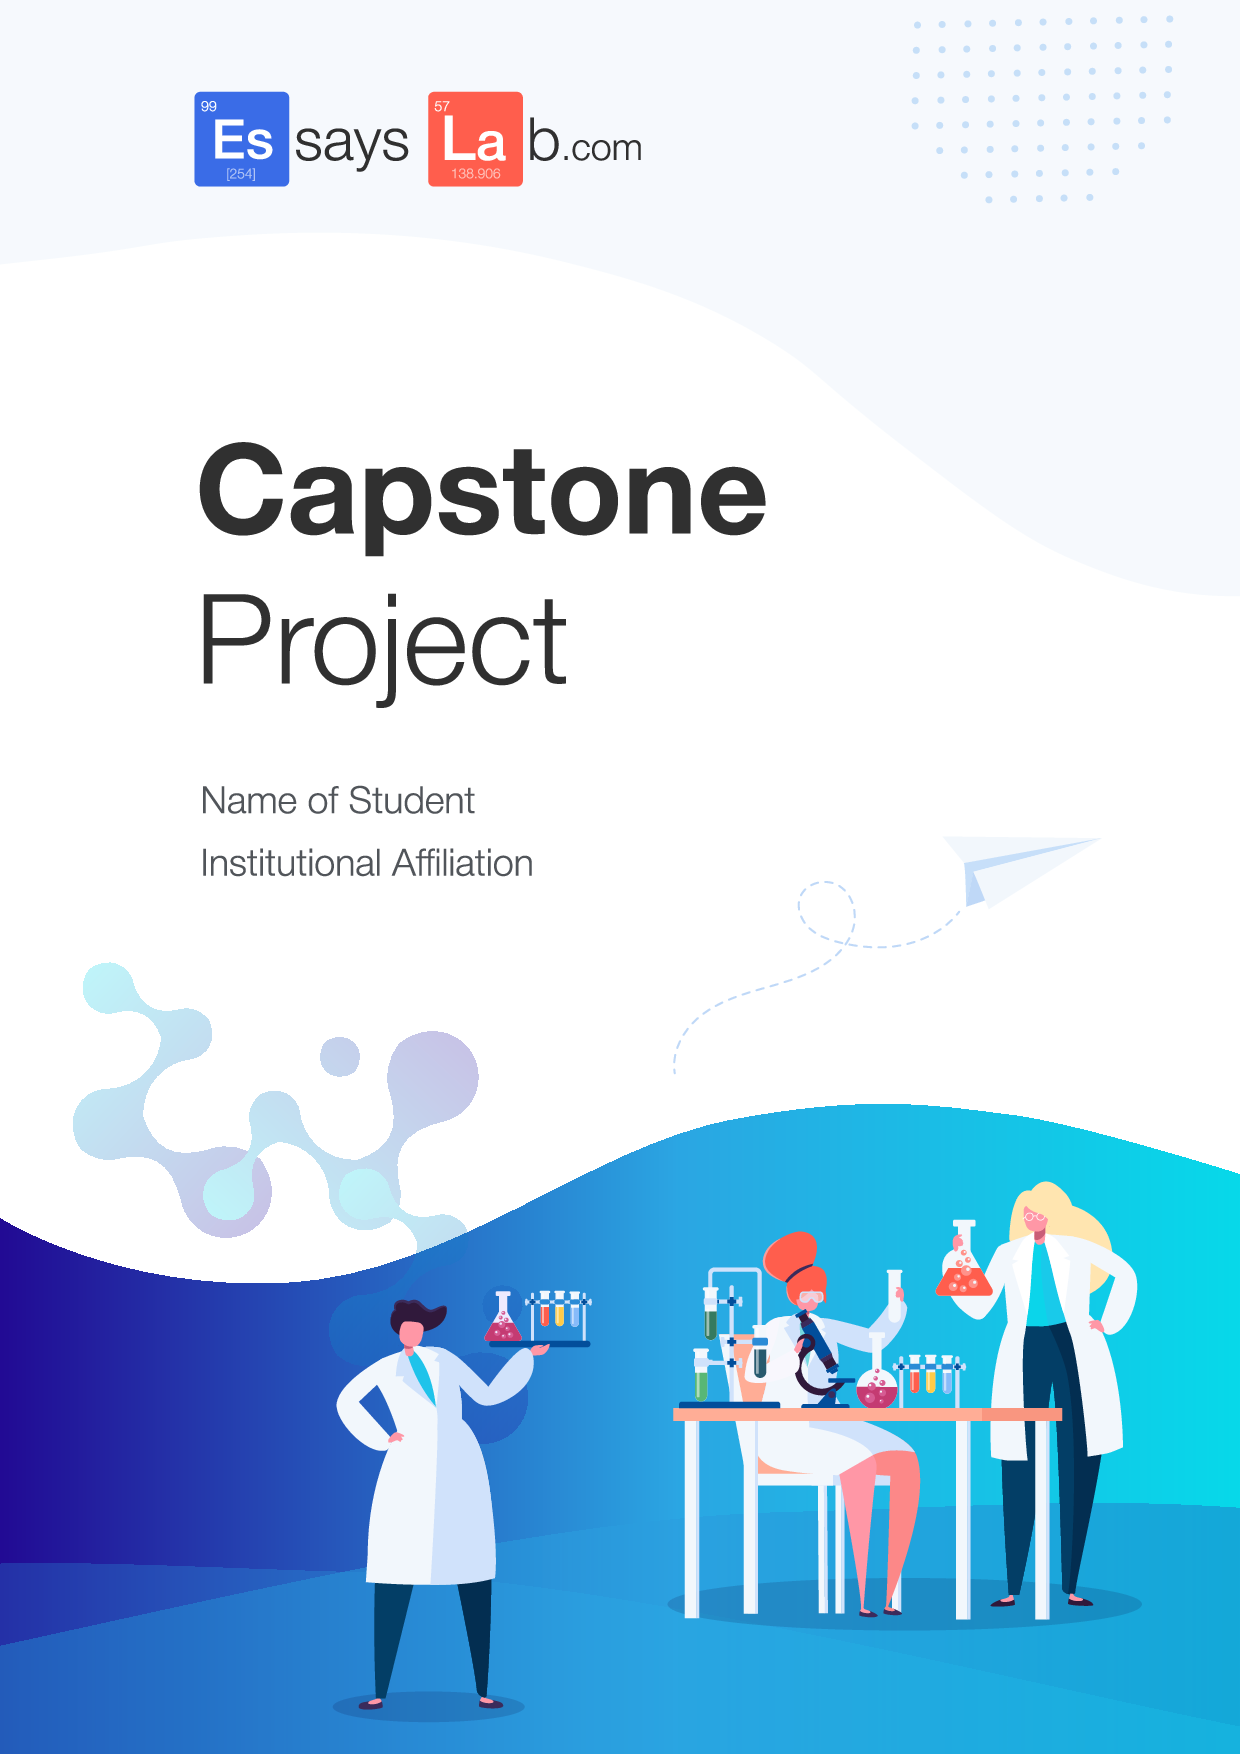 capstone project upgrad